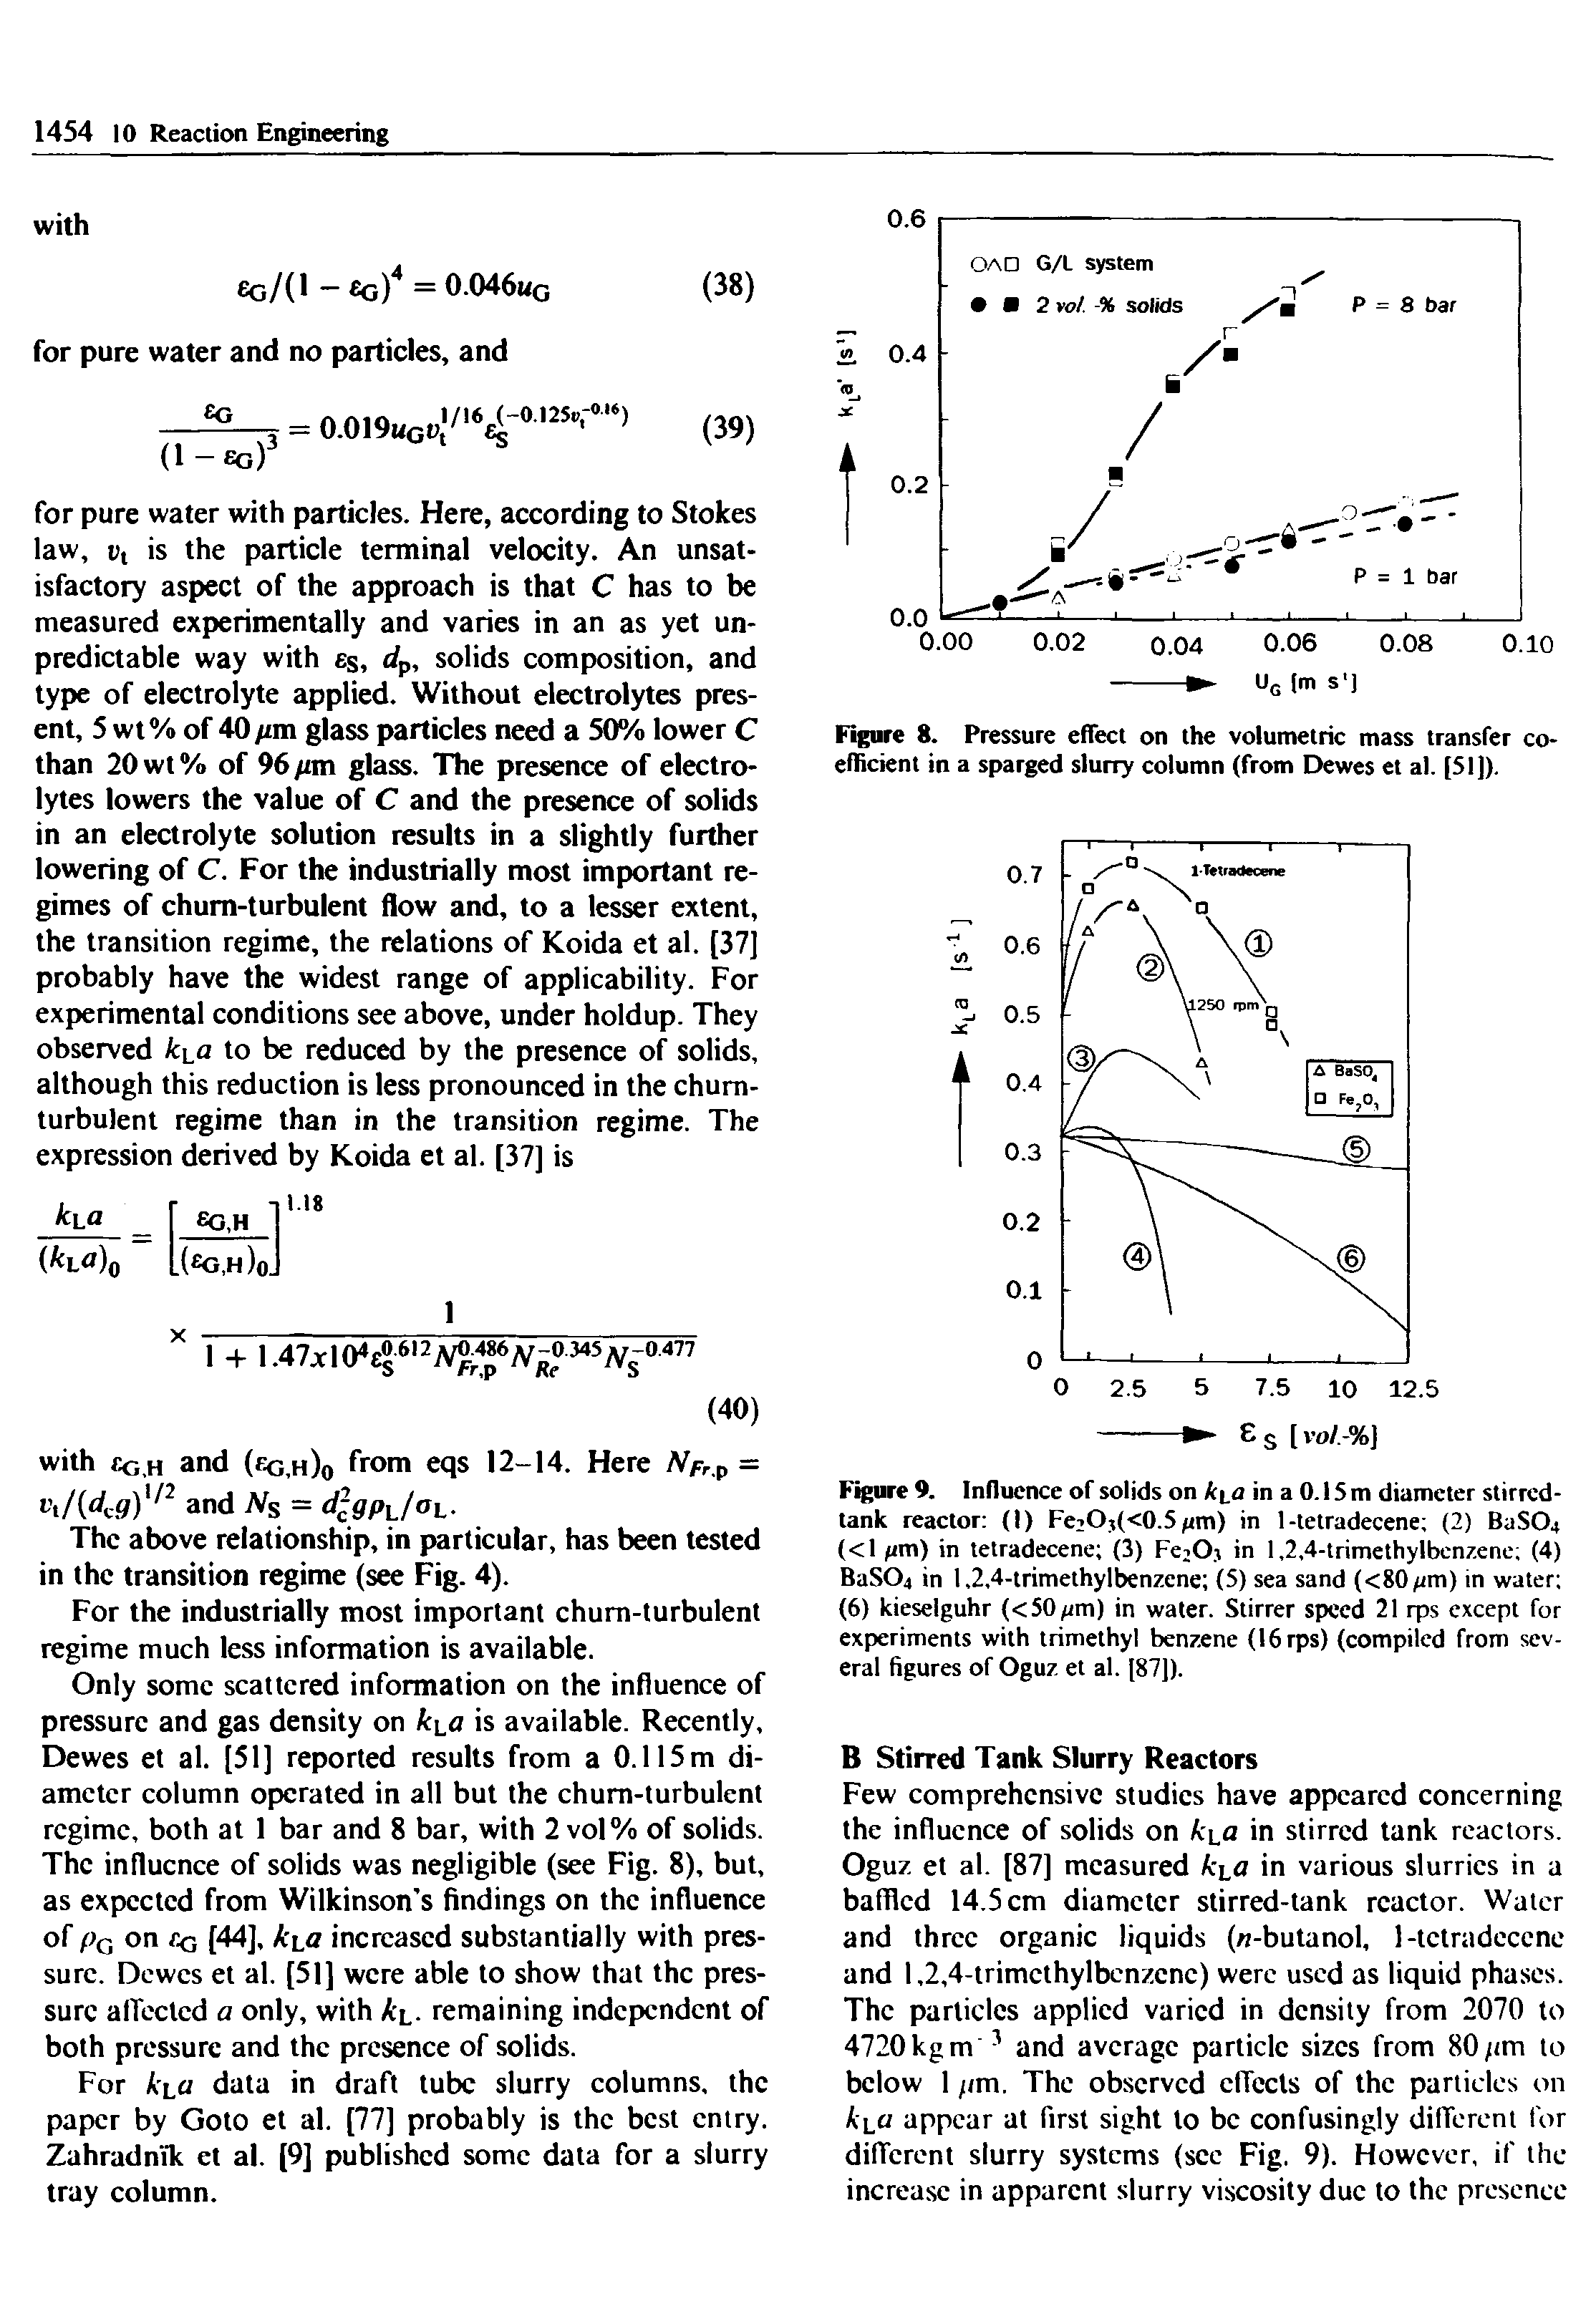 Figure 9. Influence of solids on k a in a 0.15 m diameter stirred-tank reactor (I) FejOjfcO.Sptm) in 1-tetradecene (2) BaSO. (<1 ftm) in tetradecene (3) Fe2Oj in 1,2,4-trimethylbenzene (4) BaS04 in 1,2,4-trimethylbenzcne (5) sea sand (<80//m) in water (6) kieselguhr (<50 m) in water. Stirrer speed 21 rps except for experiments with trimethyl benzene (16 rps) (compiled from several figures of Oguz et al. [87]).